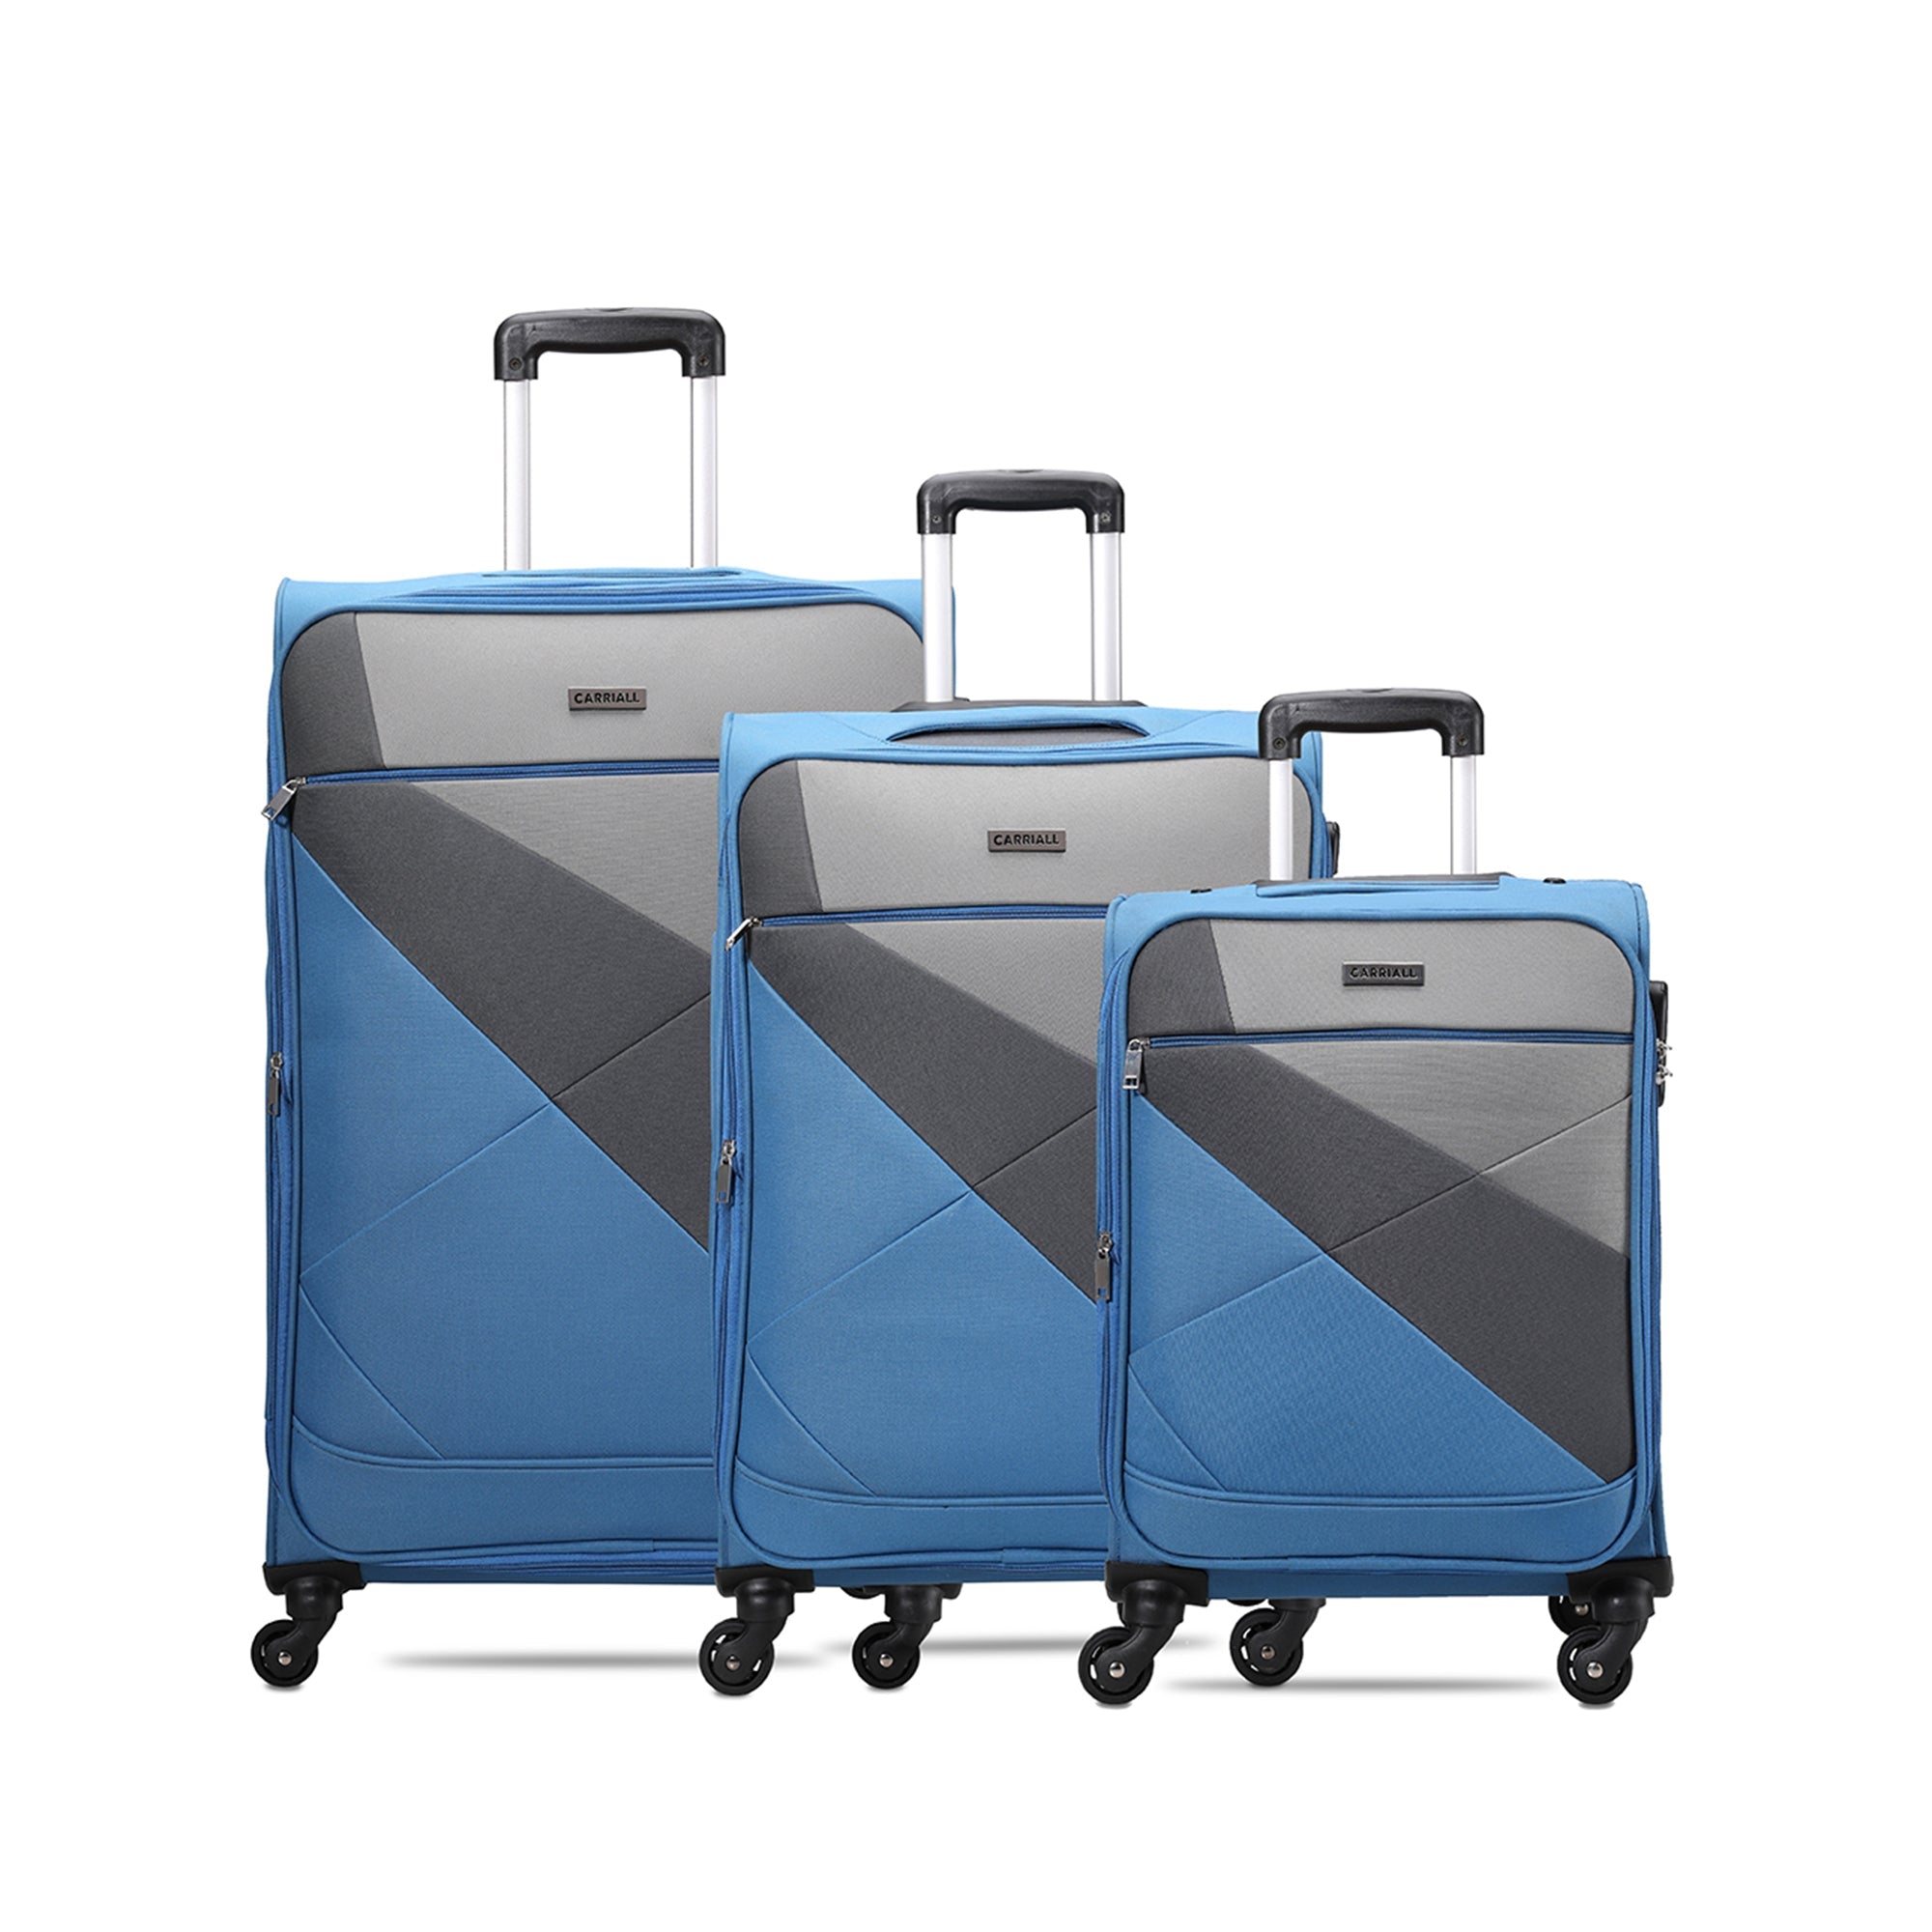 Vista Luggage Set of 3